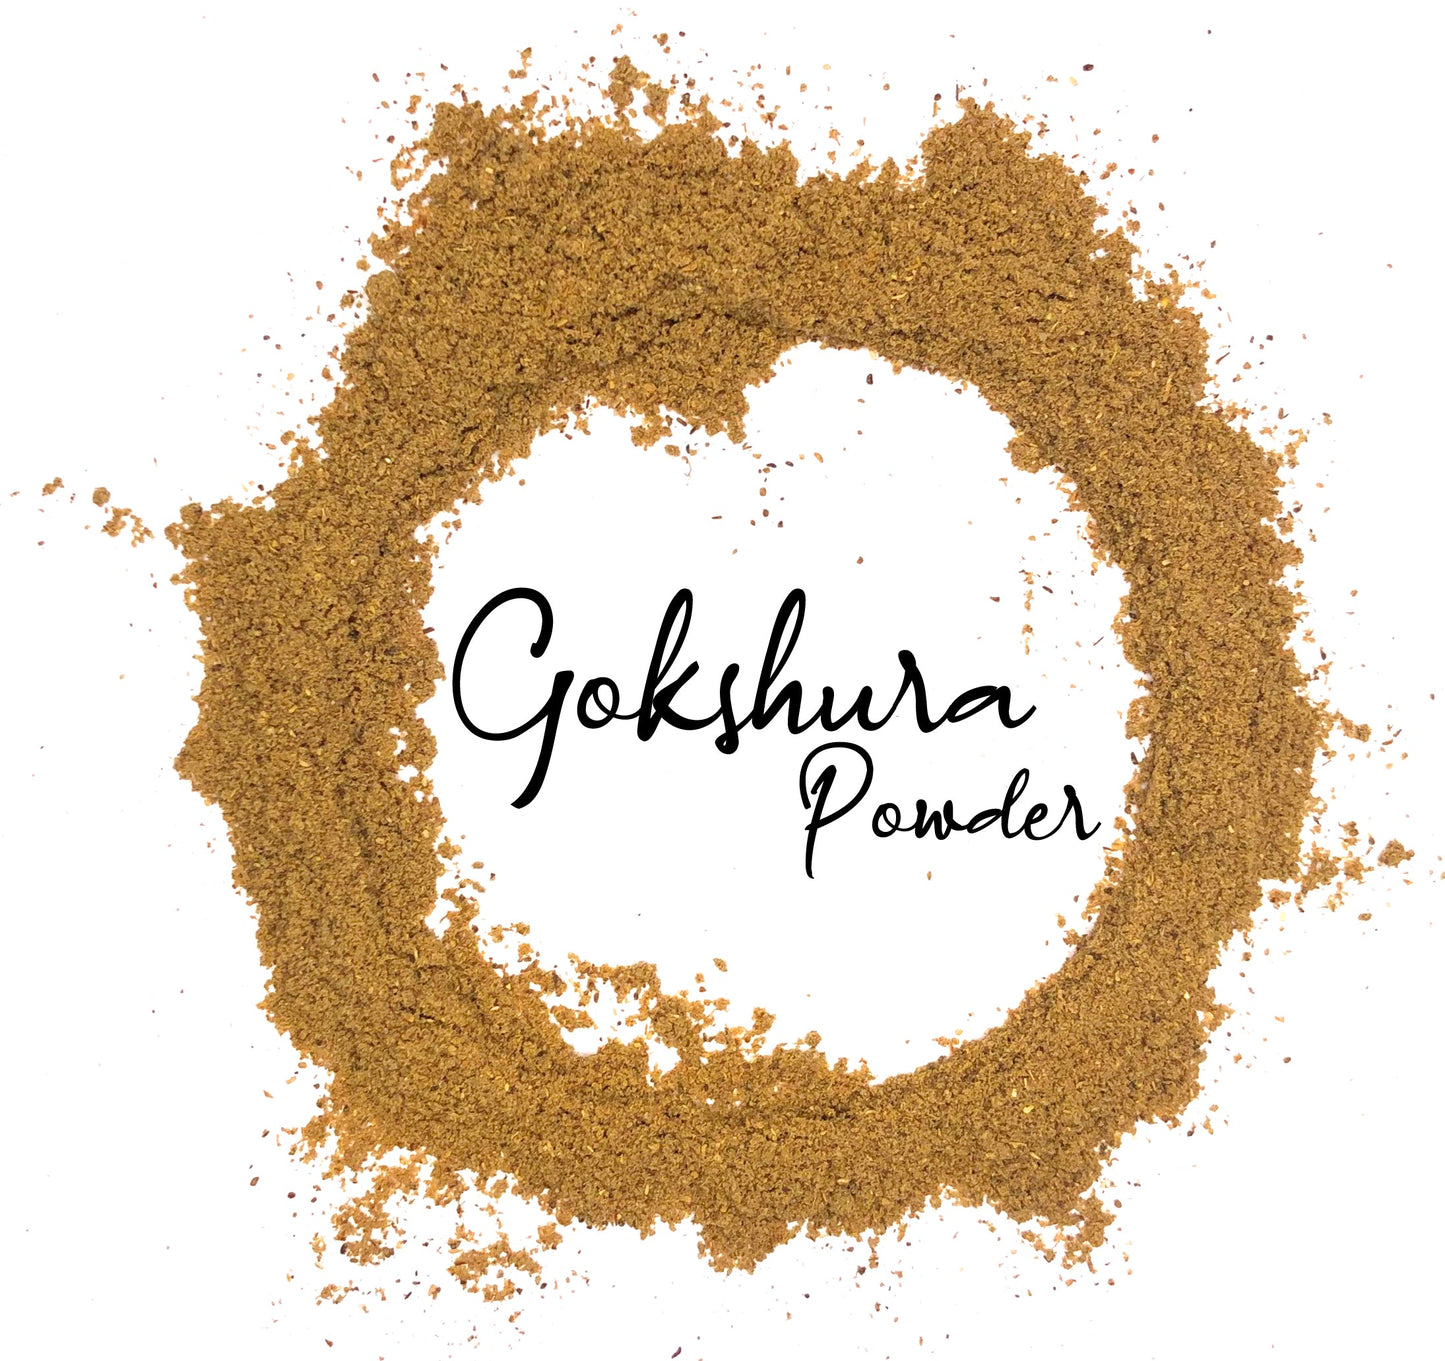 Wholesale Spices & Herbs - Gokshura Powder, Organic-Tribulus terrestris - 2.9oz(83g) Jar